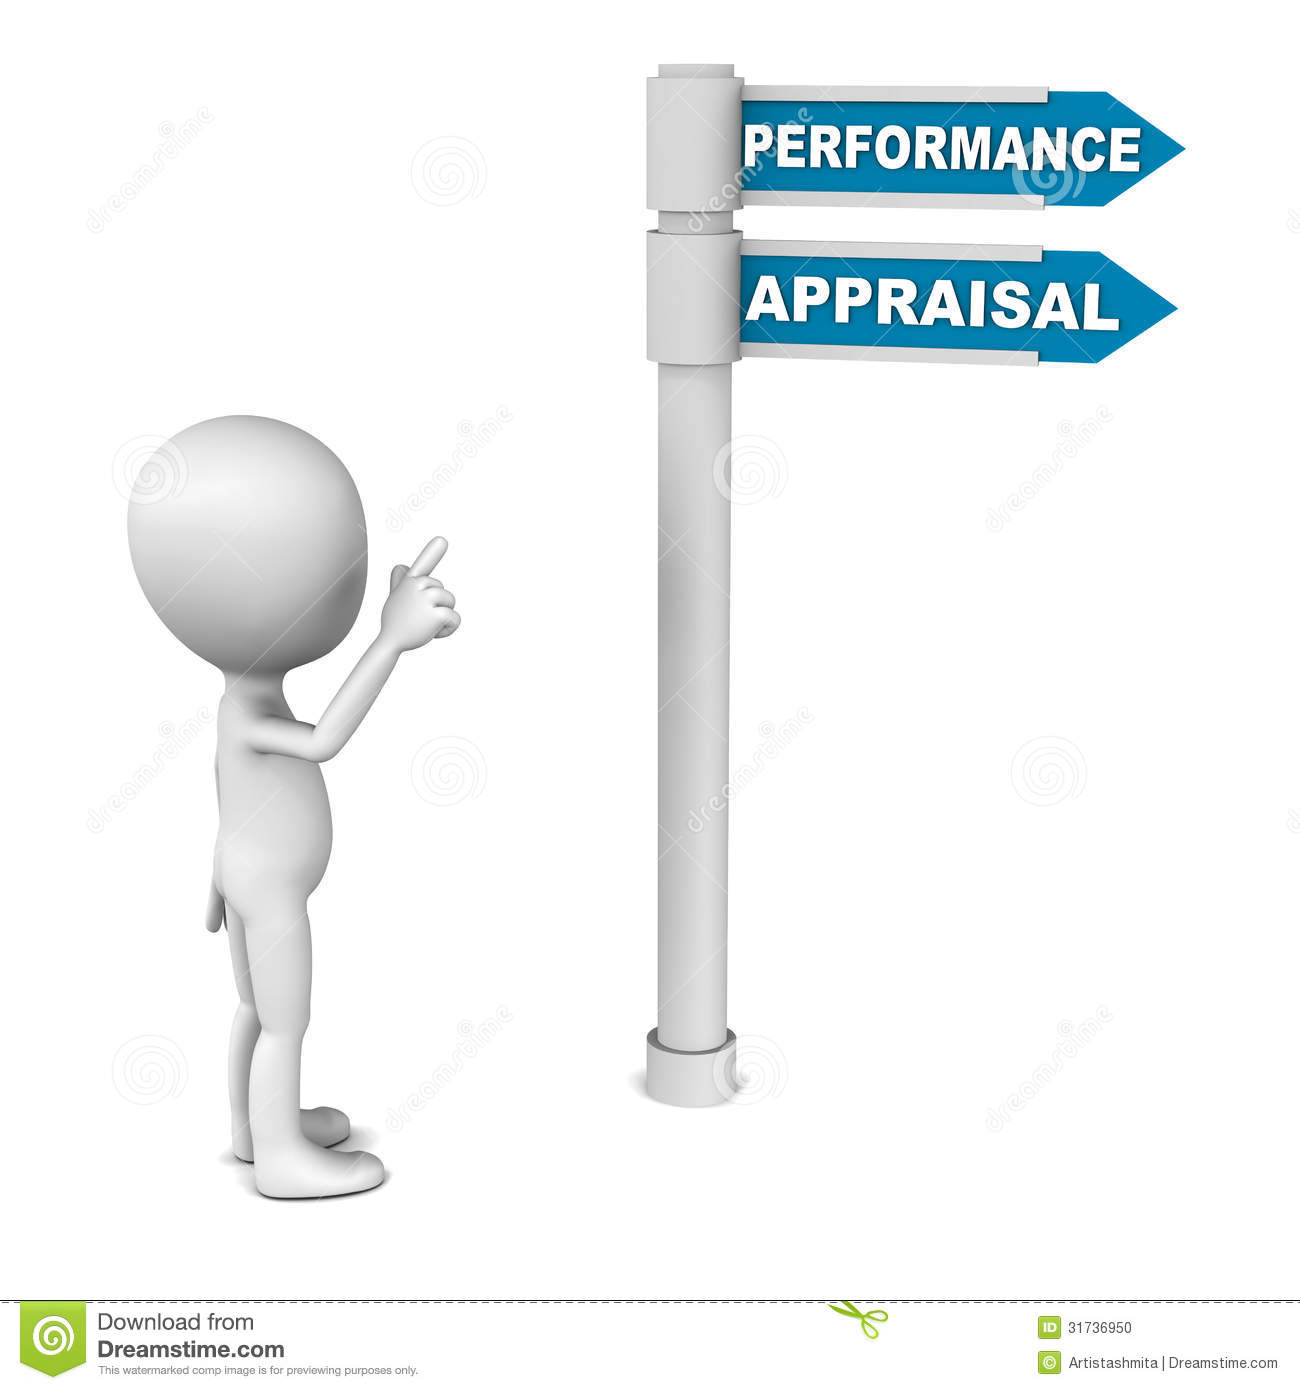 Performance Appraisal A Necessary Evil       Leadership And Innovation